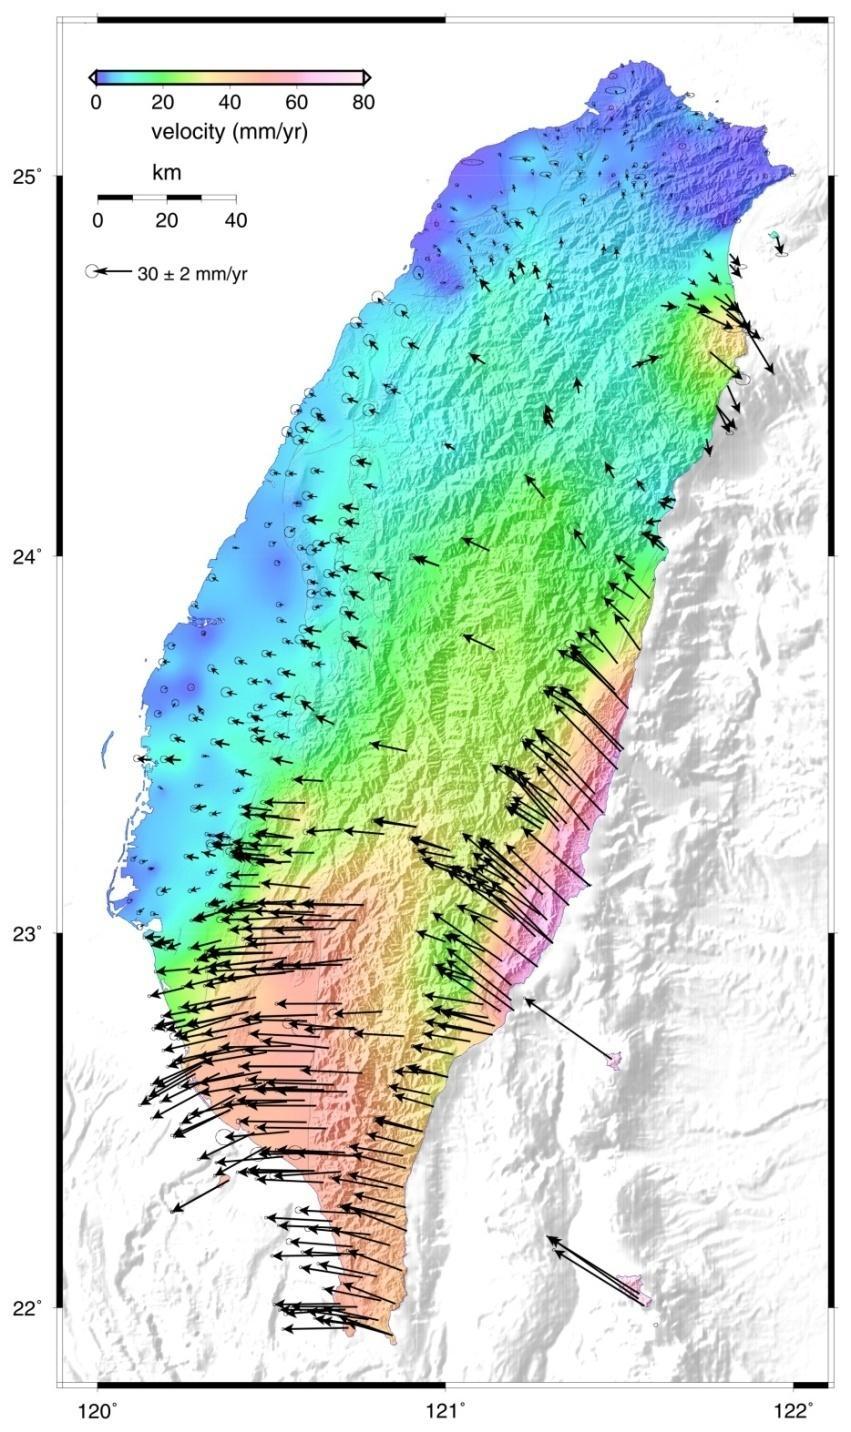 Horizontal velocity field of Taiwan The Coastal Range and the southwestern Taiwan are